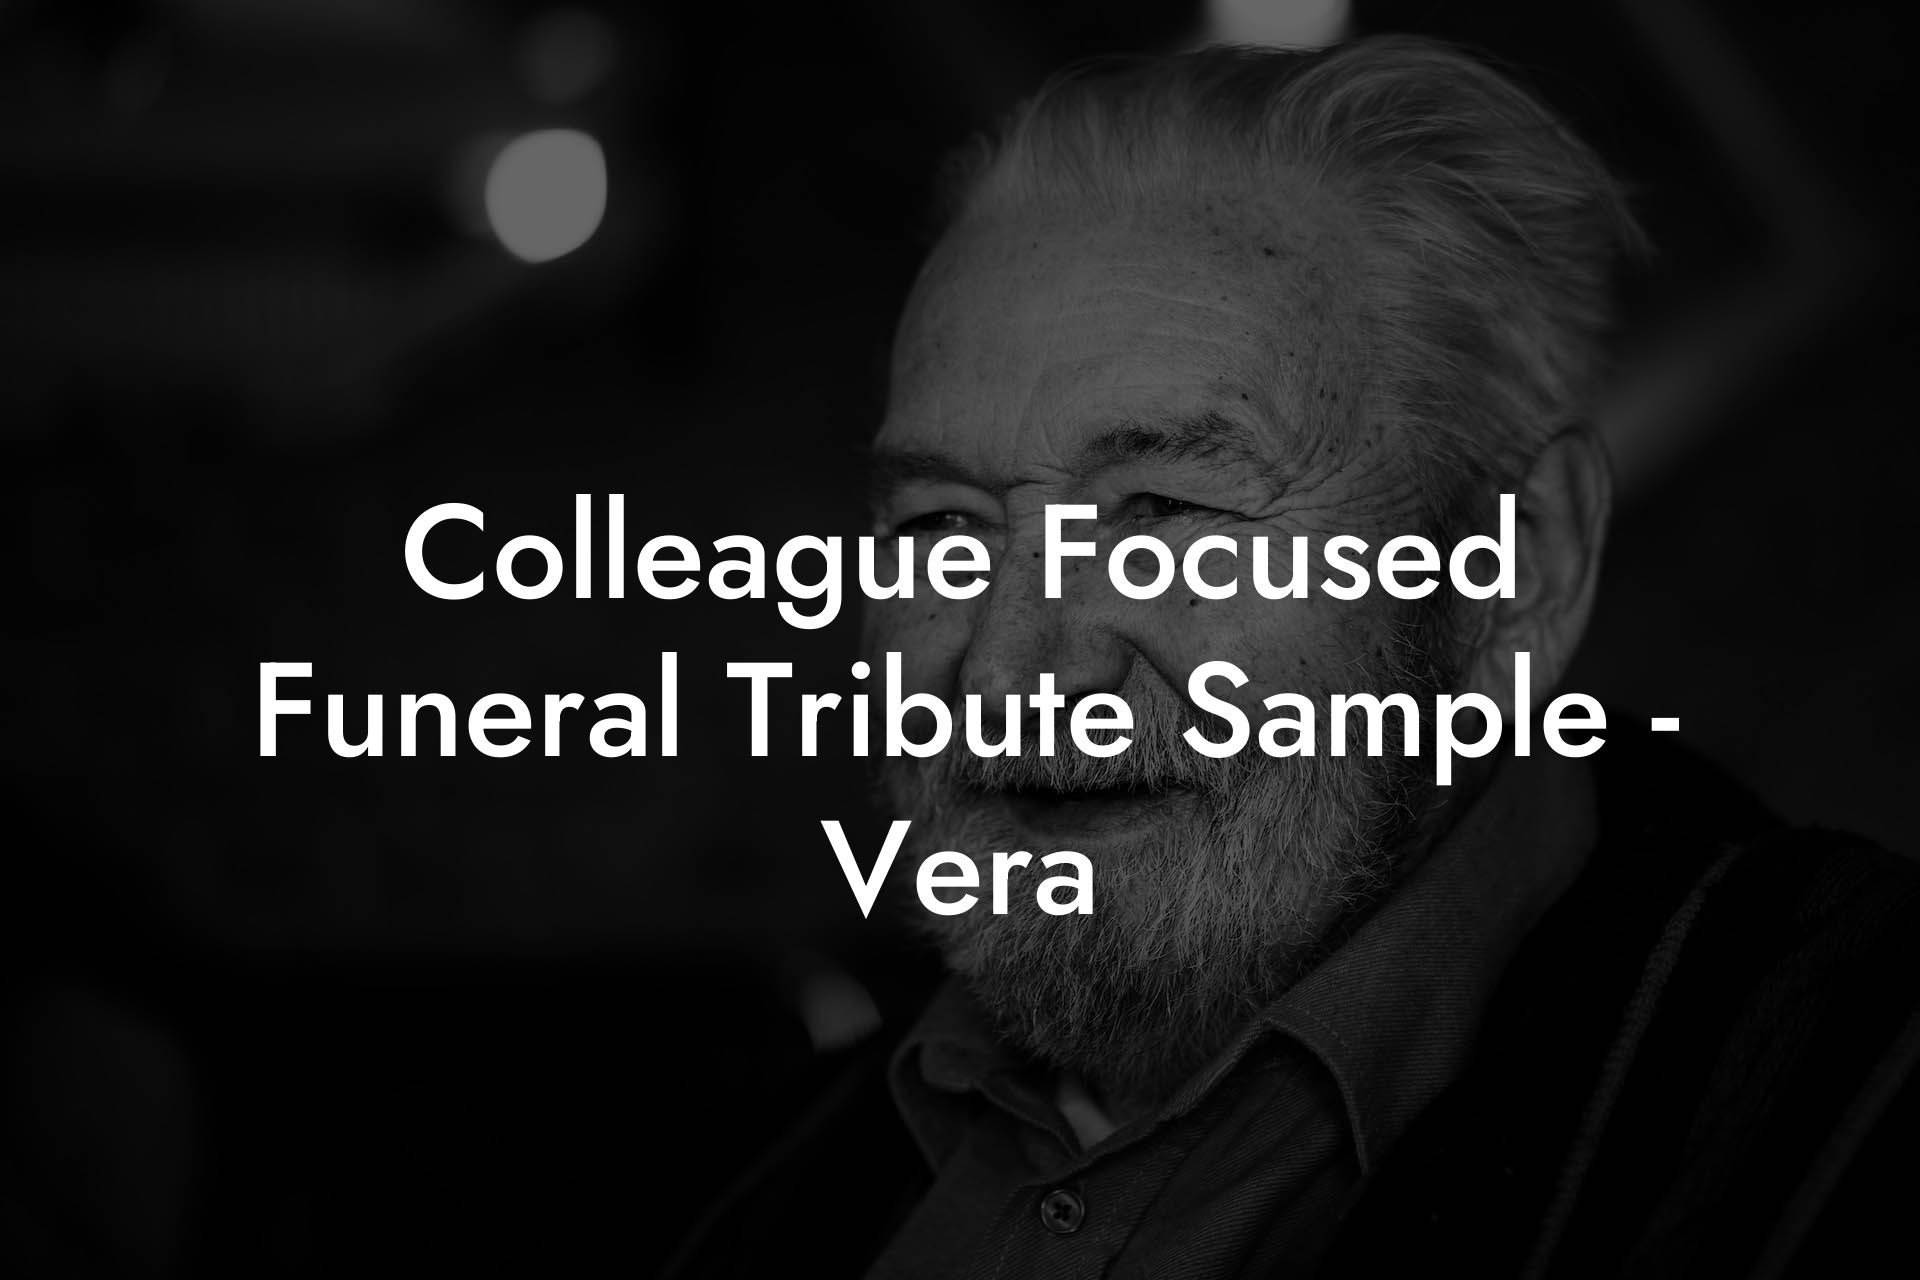 Colleague Focused Funeral Tribute Sample - Vera